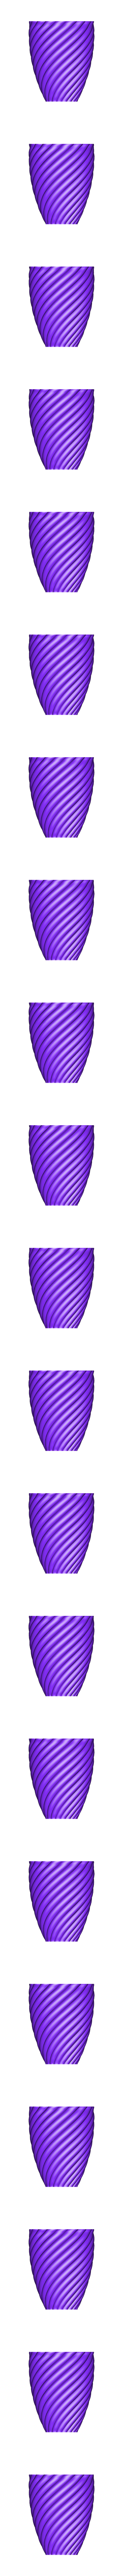 Lamp1.STL Download free STL file Rotation folded lamp shade • 3D printing object, MaterialsToBuils3D